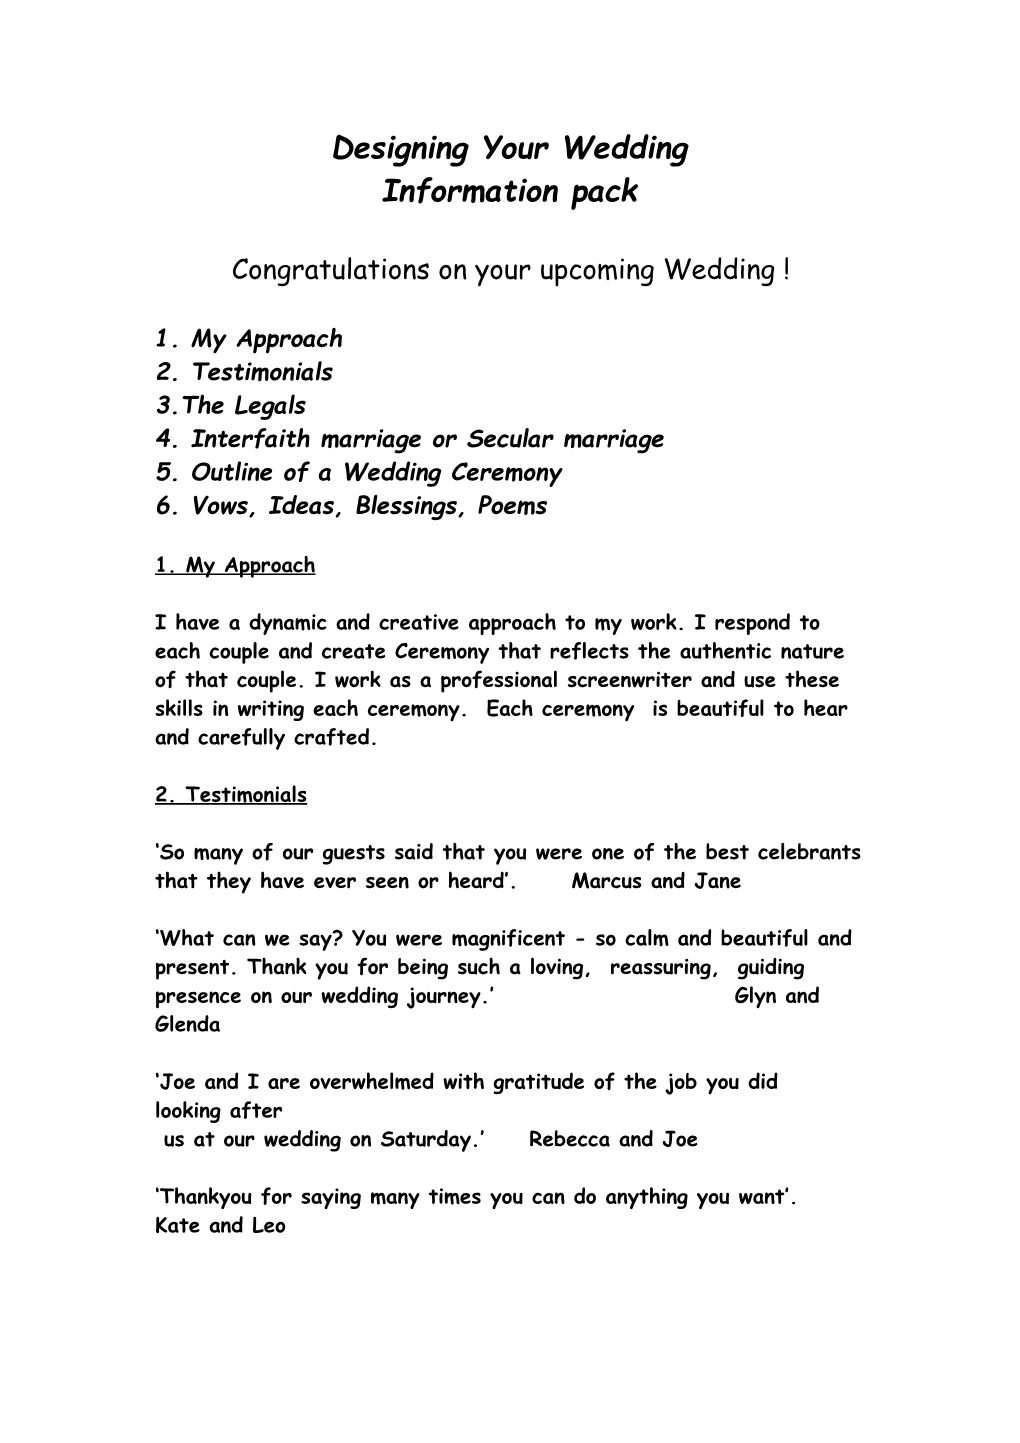 Designing Your Wedding